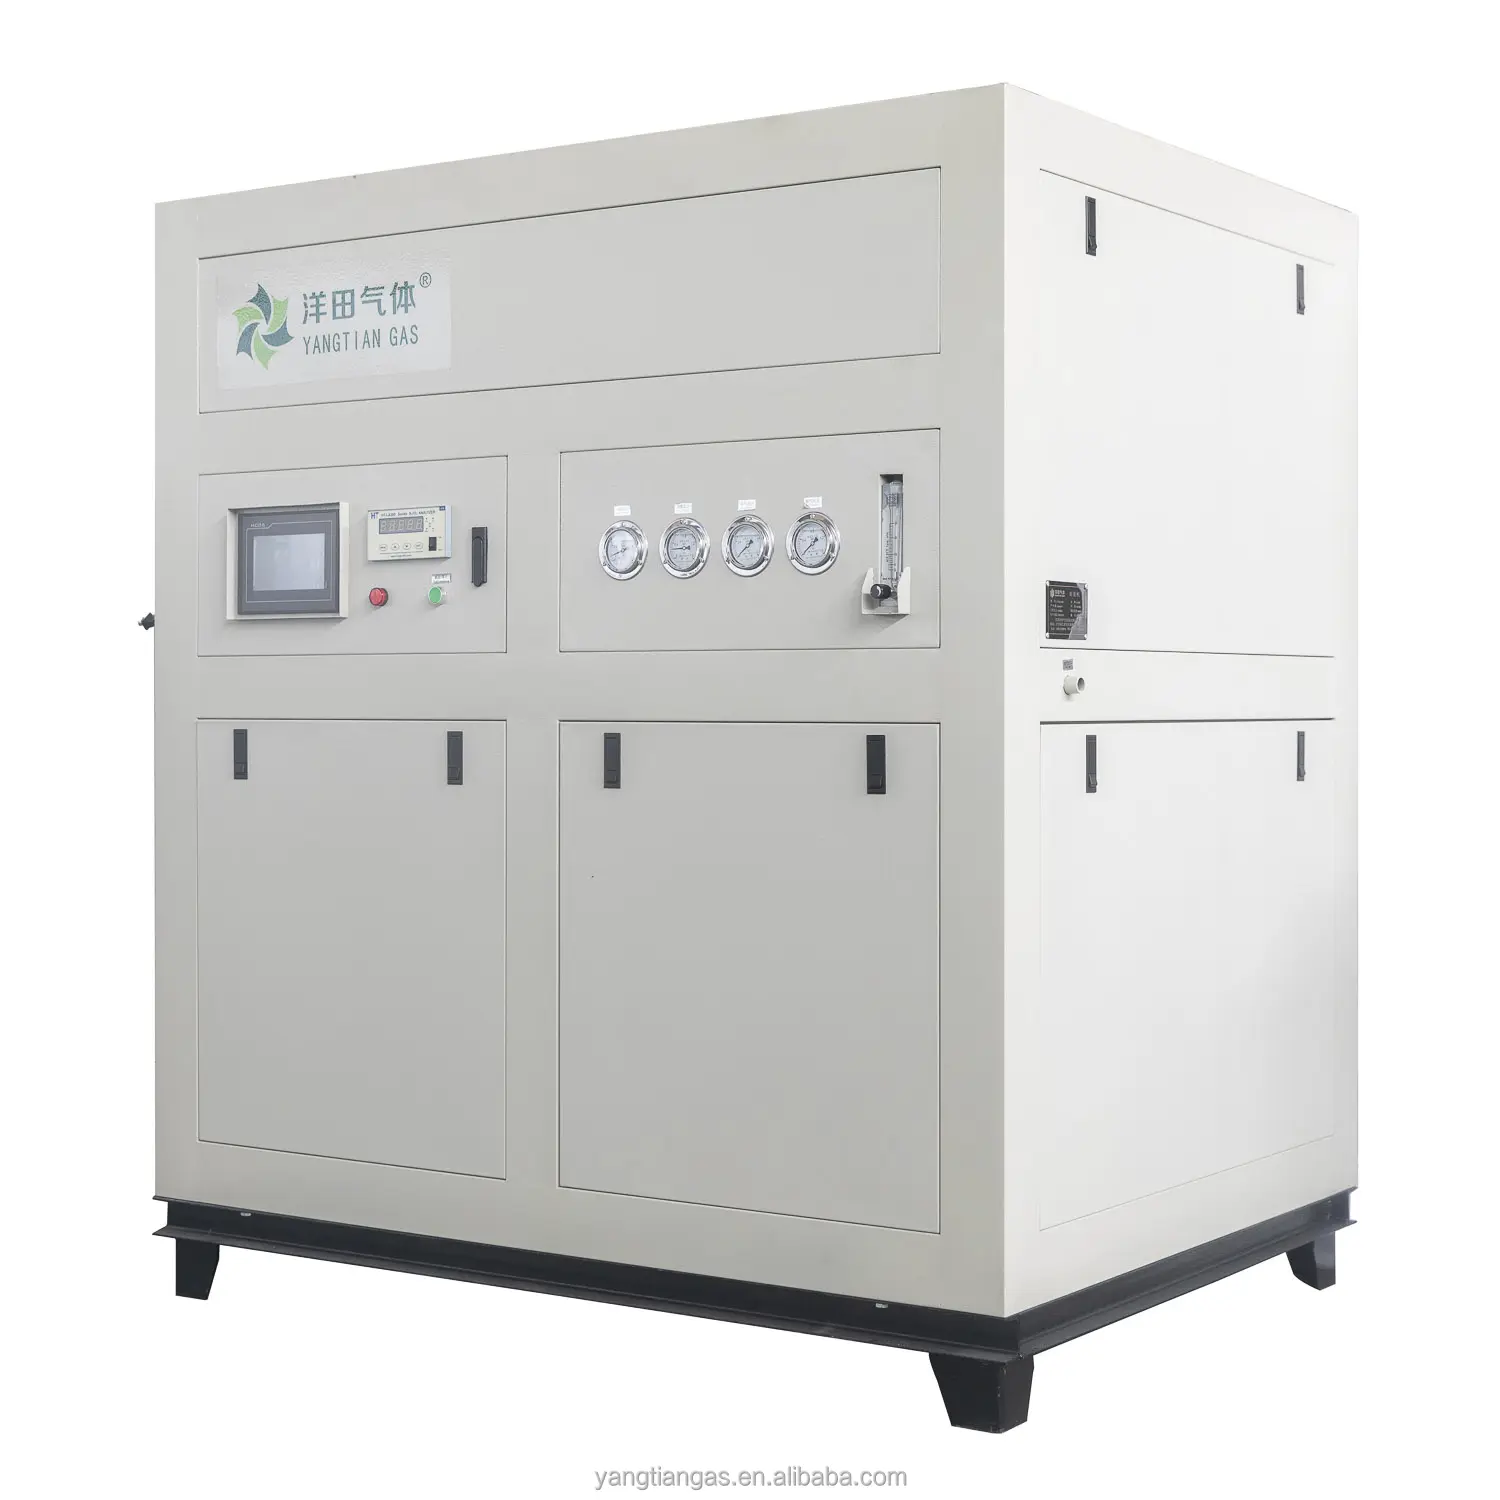 Yangtian Long-Service Life Industrial Grade Oxygen Cylinder Refilling Machine Oxigene Production